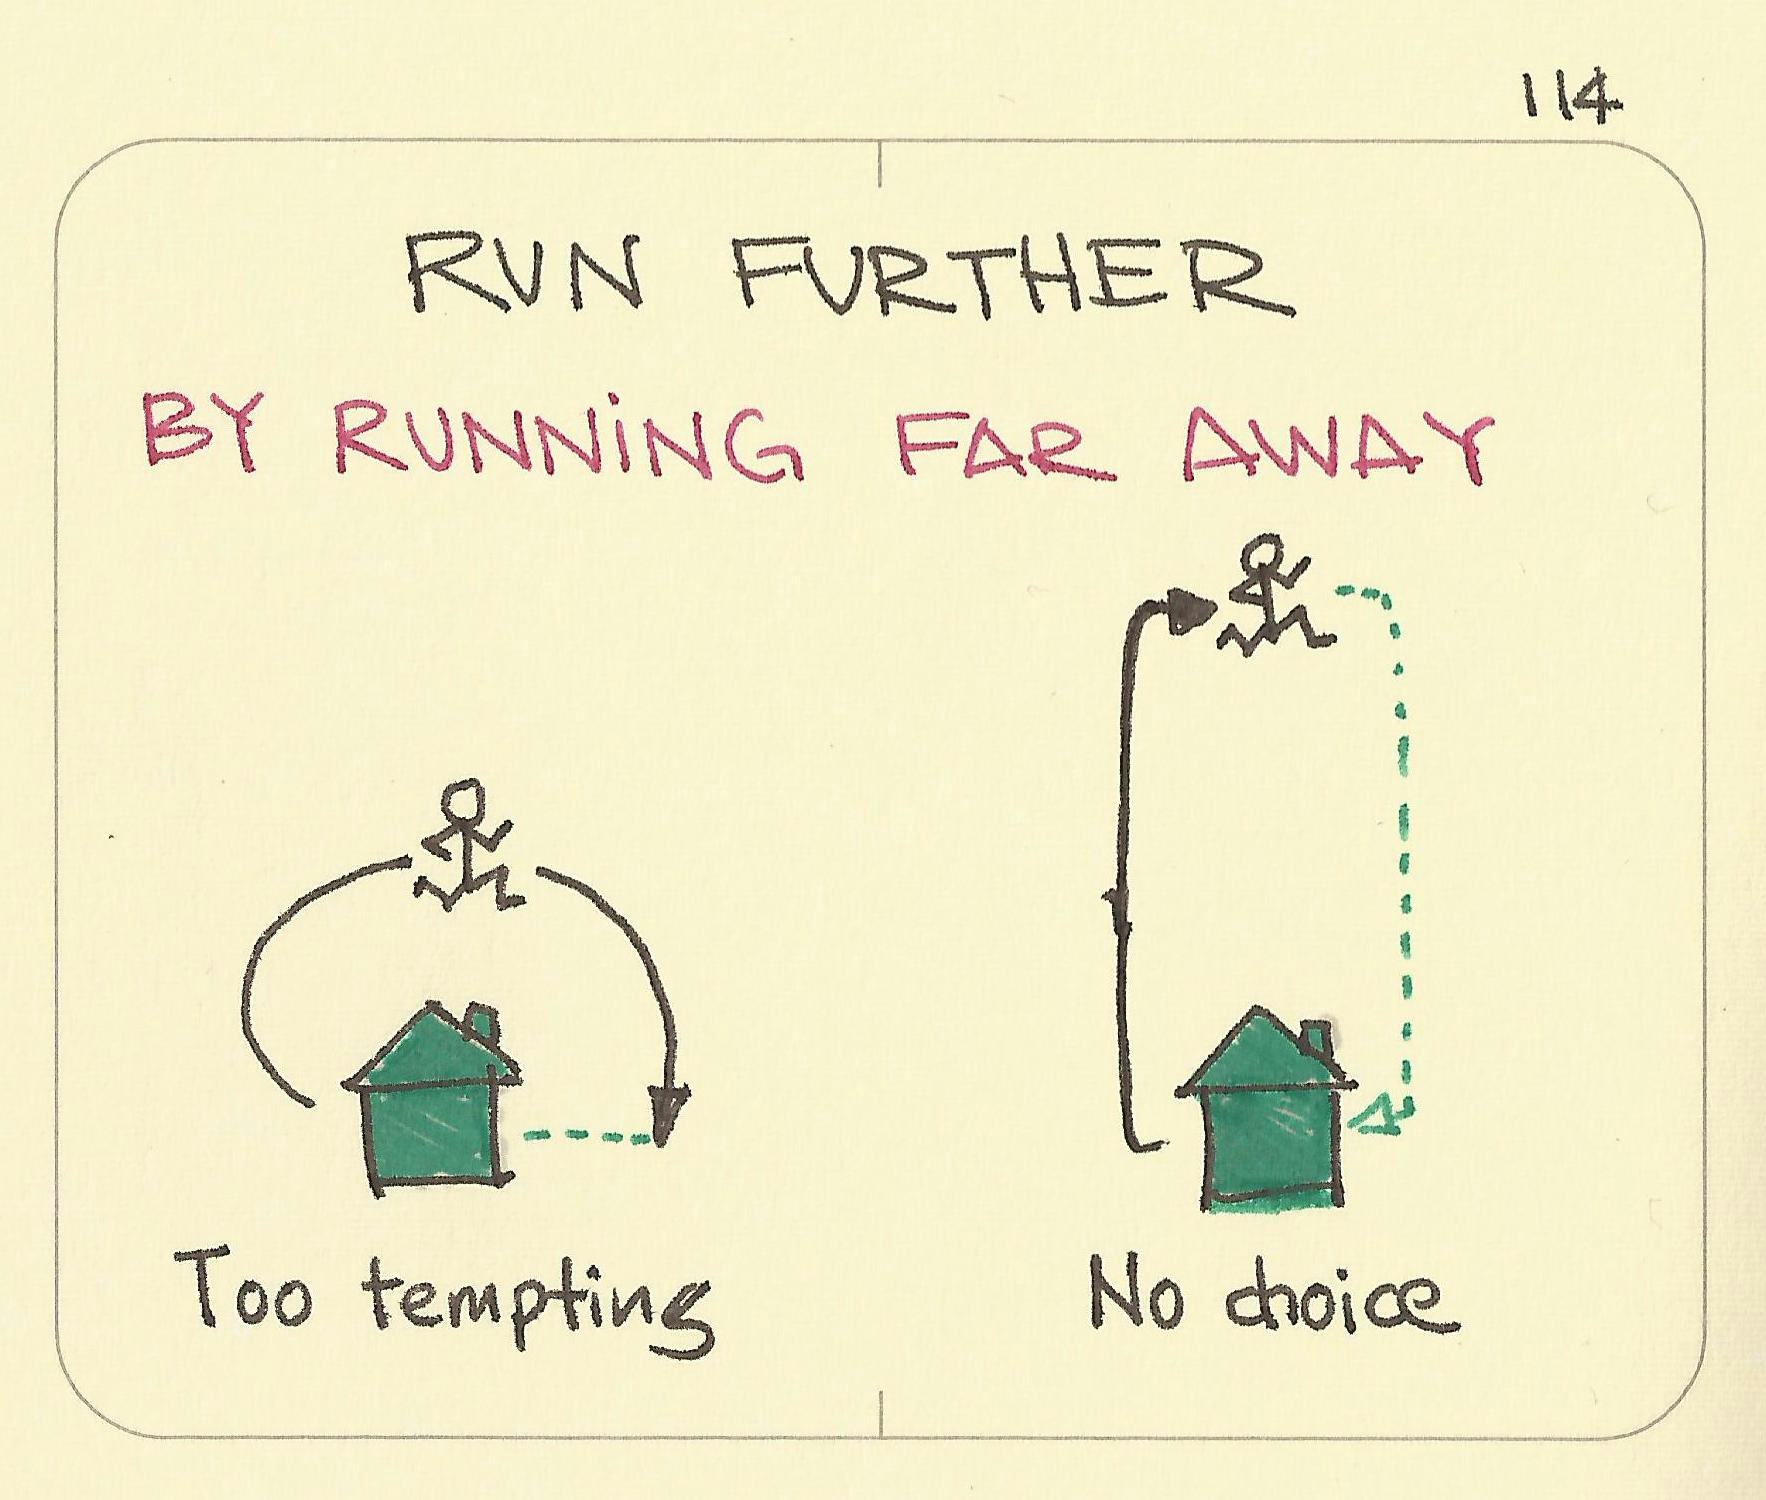 Run further by running far away - Sketchplanations